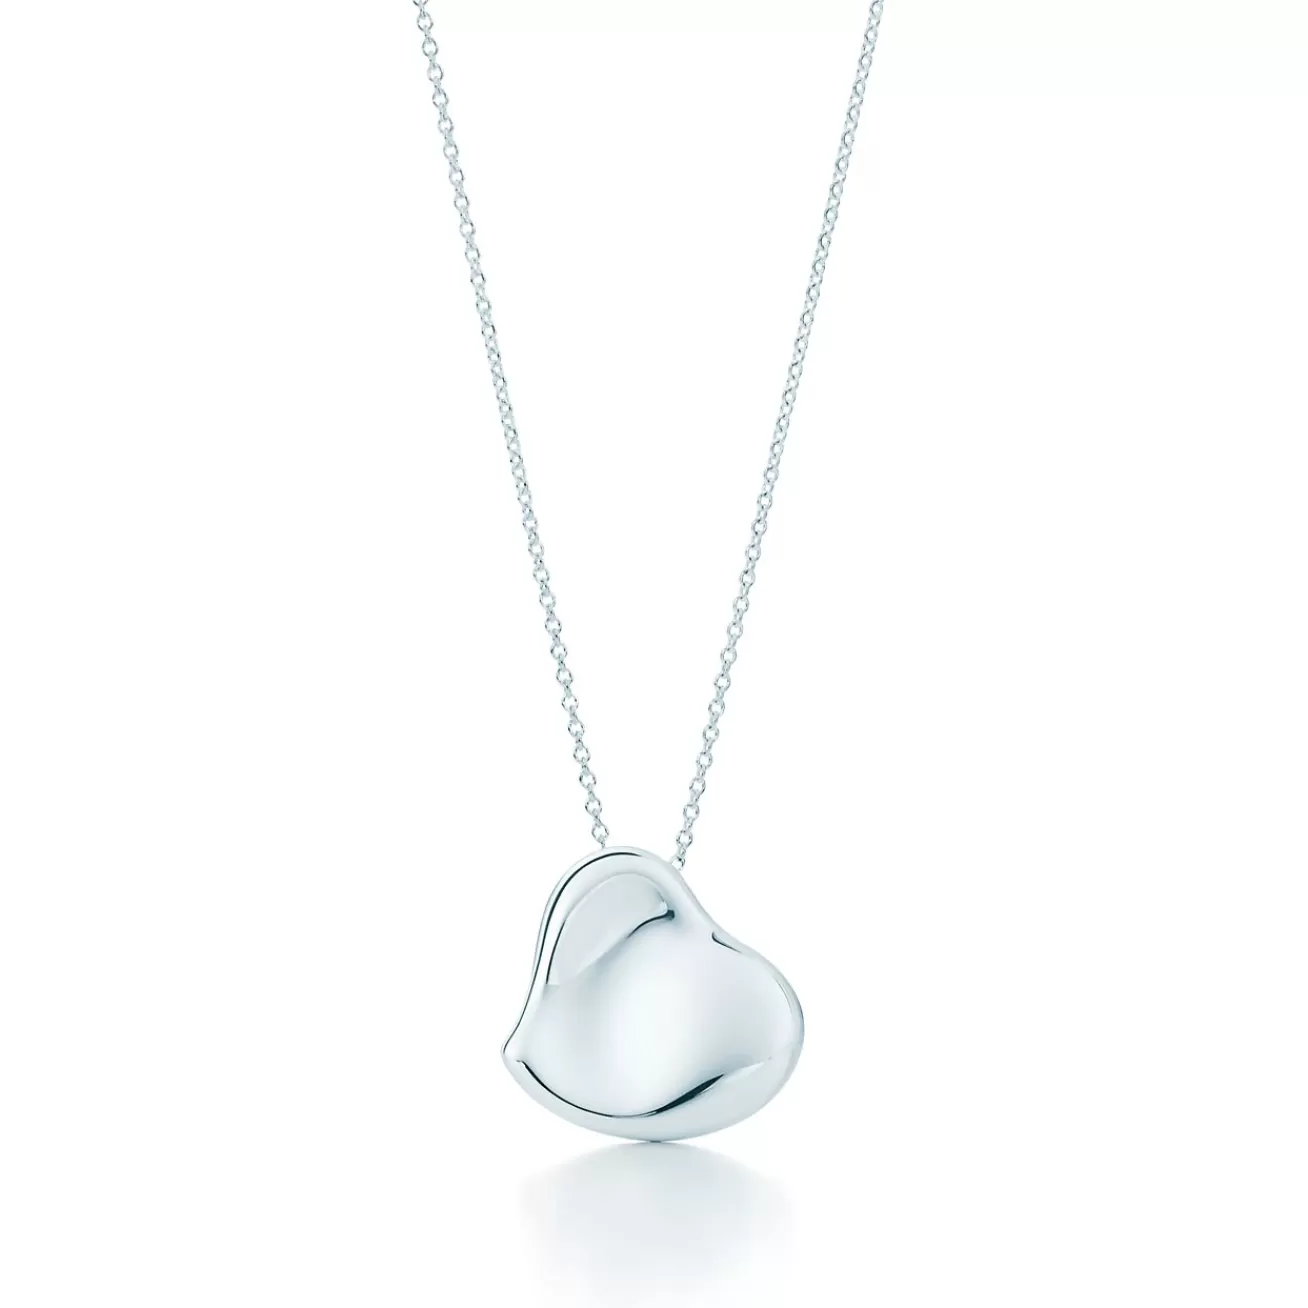 Tiffany & Co. Elsa Peretti® Full Heart pendant in sterling silver, 20 mm wide. | ^ Necklaces & Pendants | Sterling Silver Jewelry